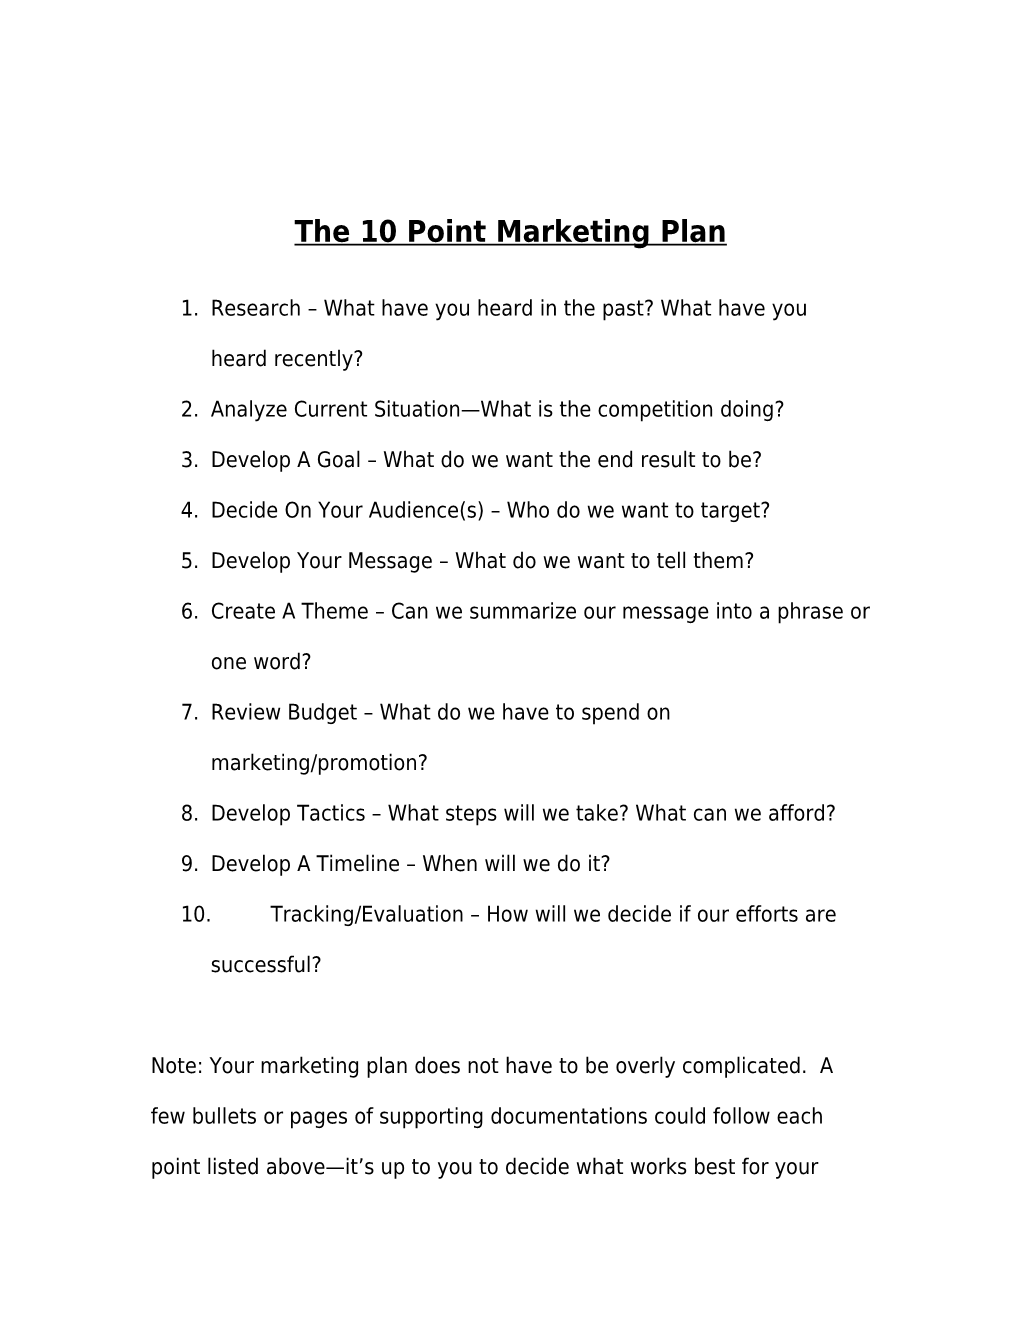 The 10 Point Marketing Plan